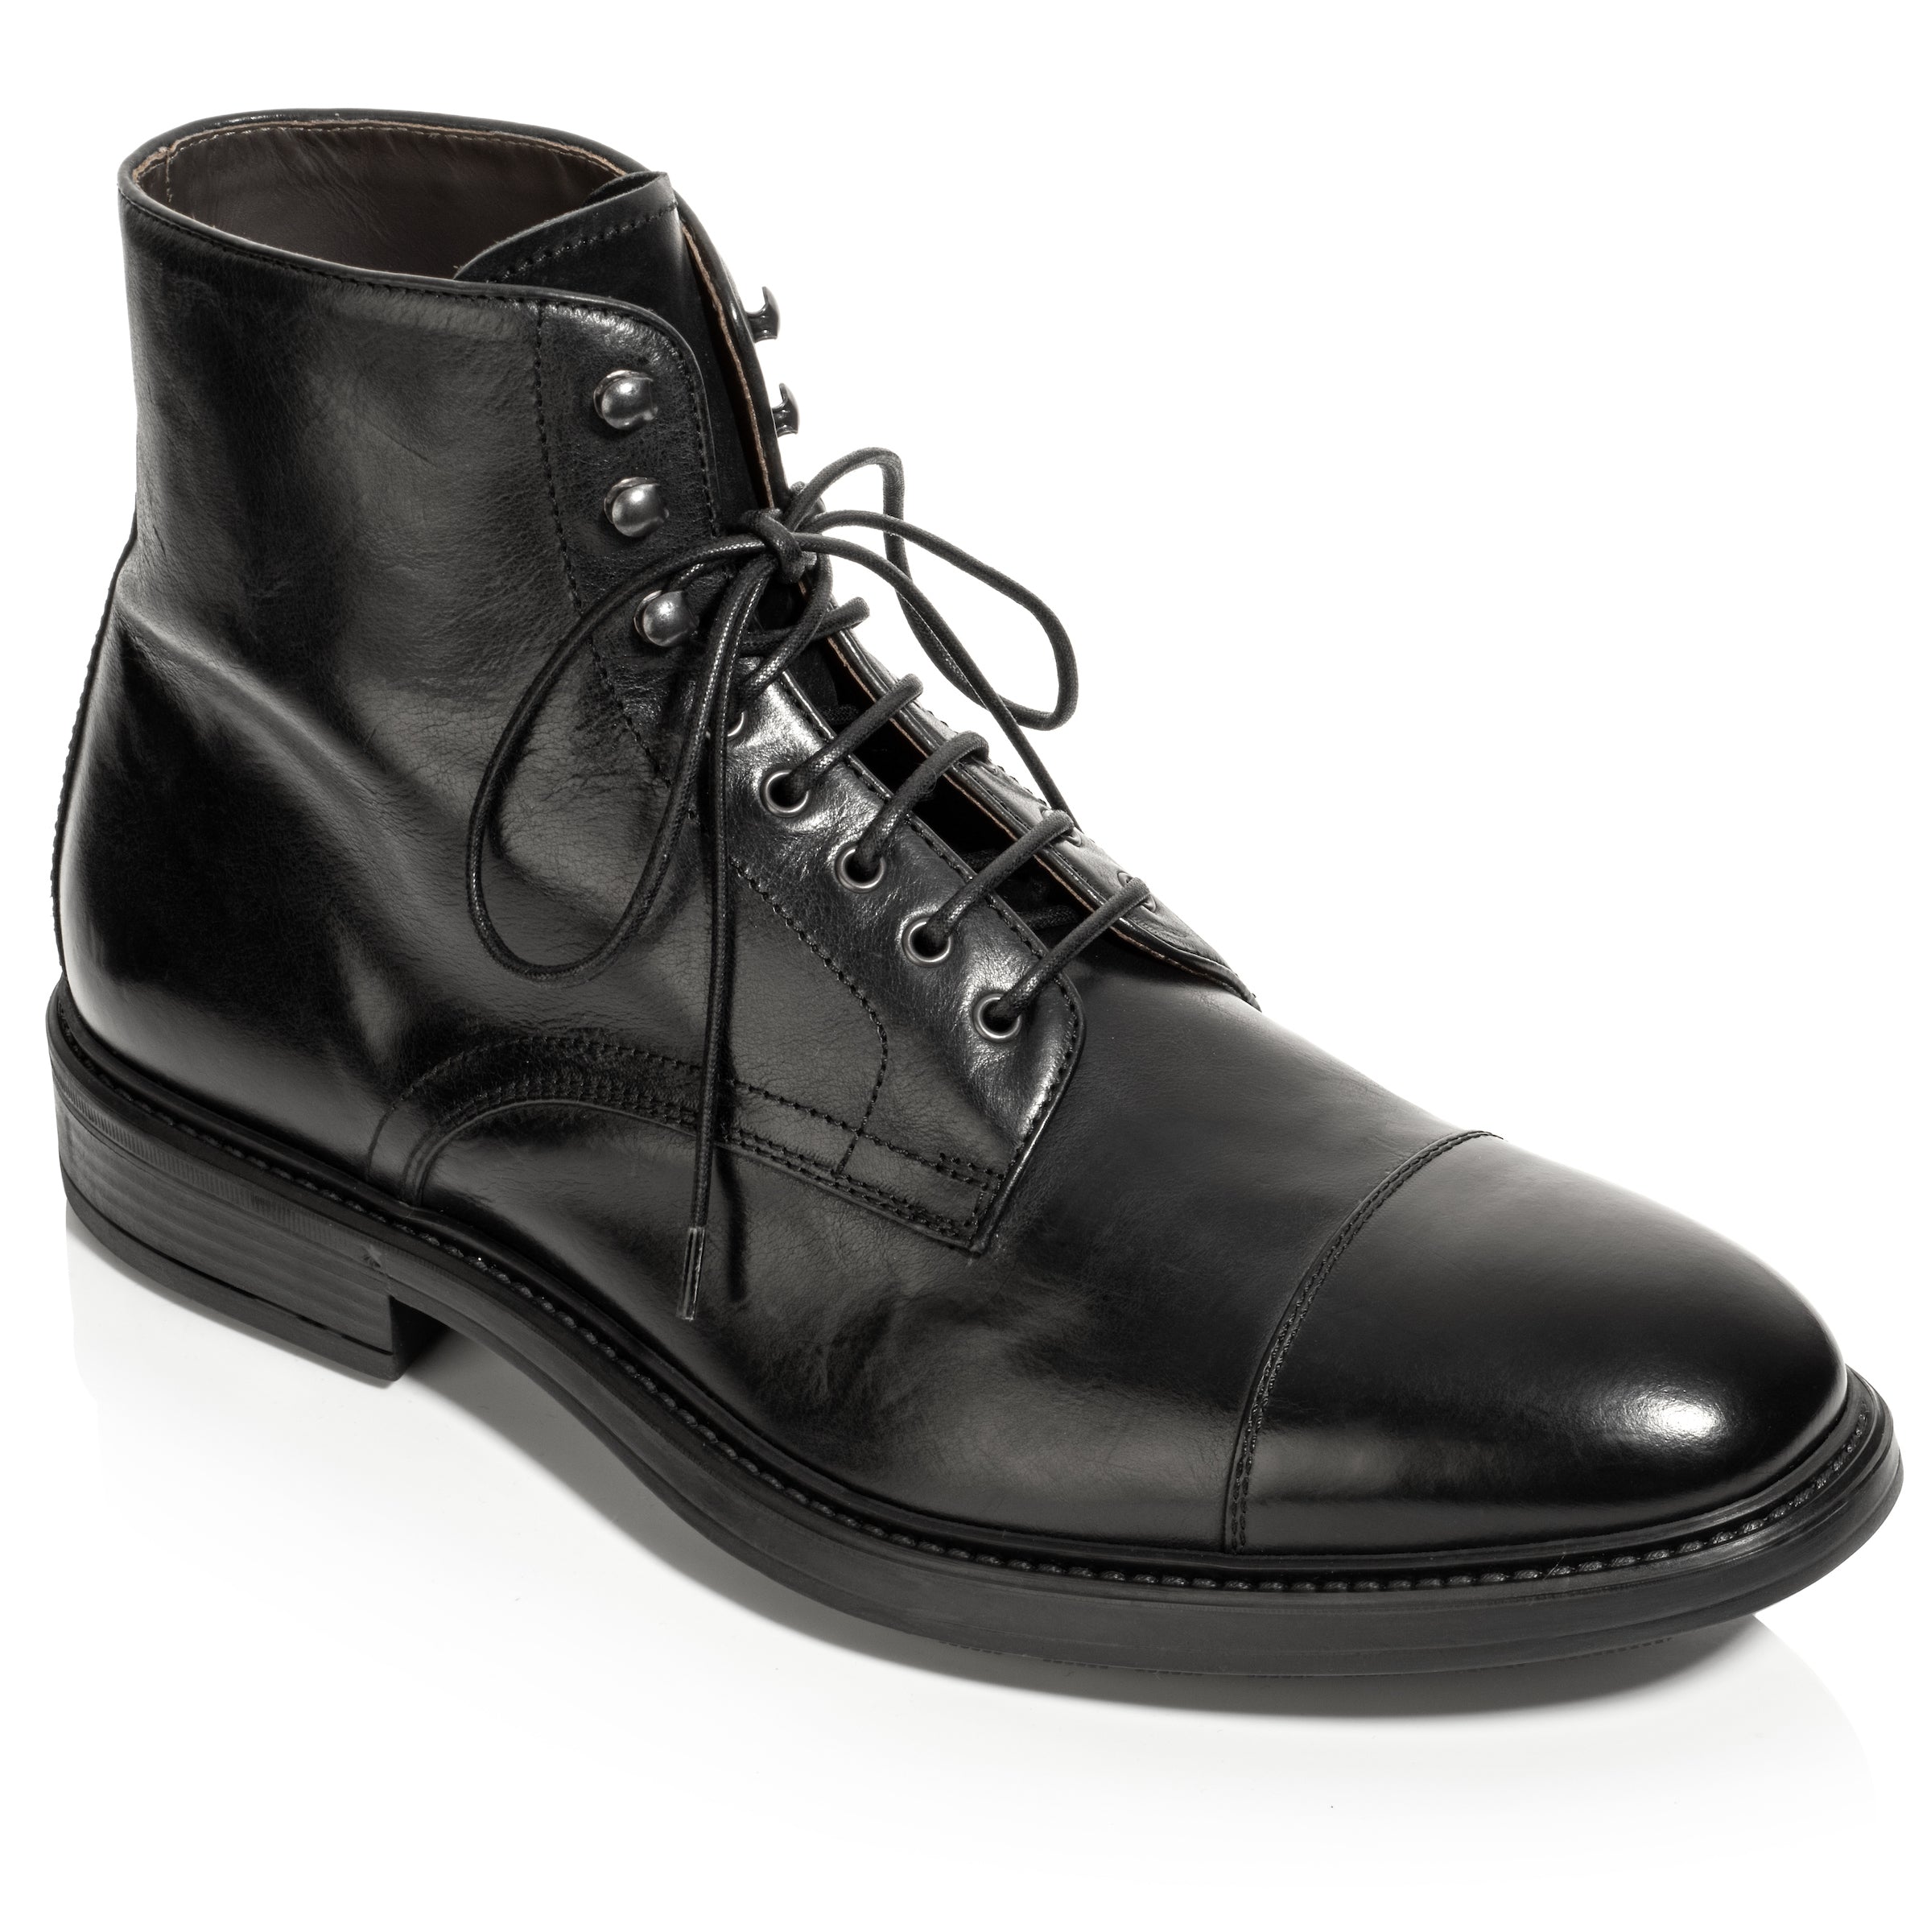 captoe boot made in canada - 靴